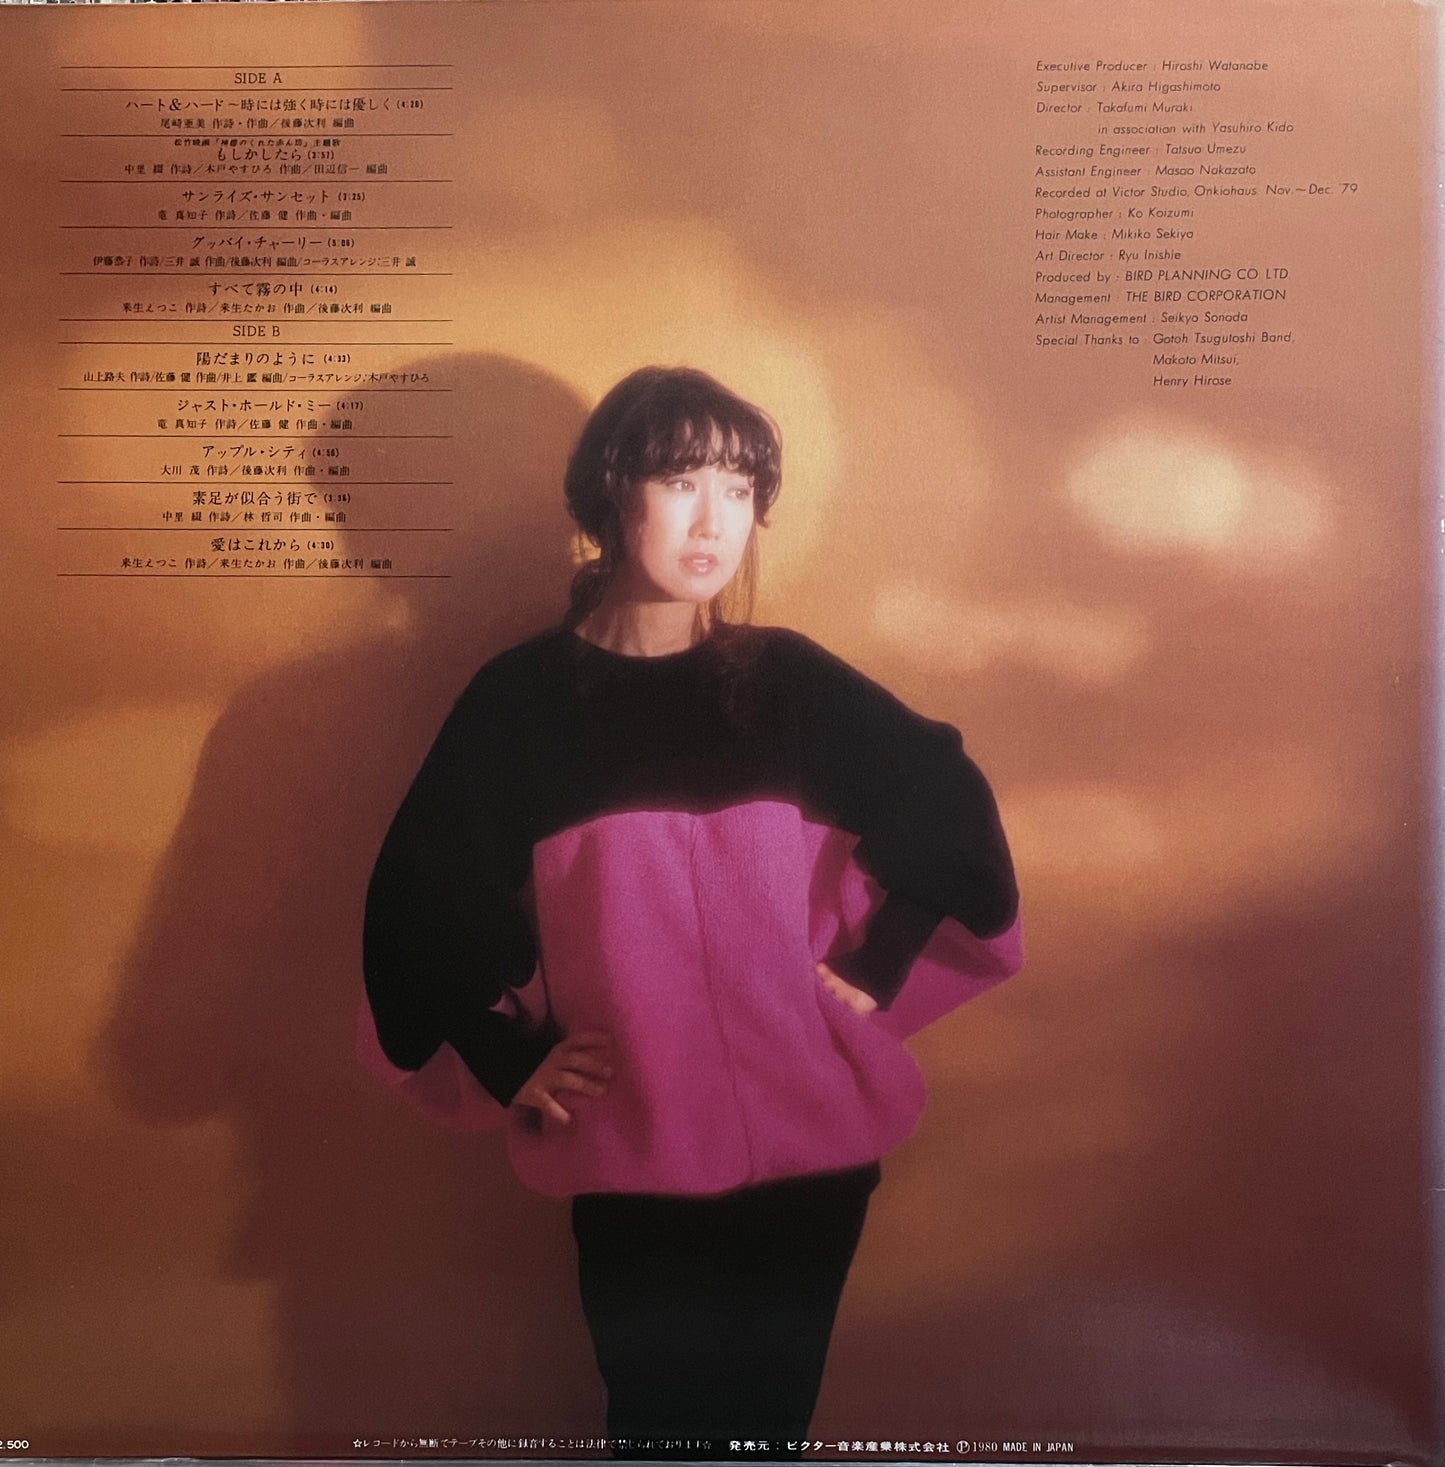 Mariko Takahashi "Sunny Afternoon" (1980)